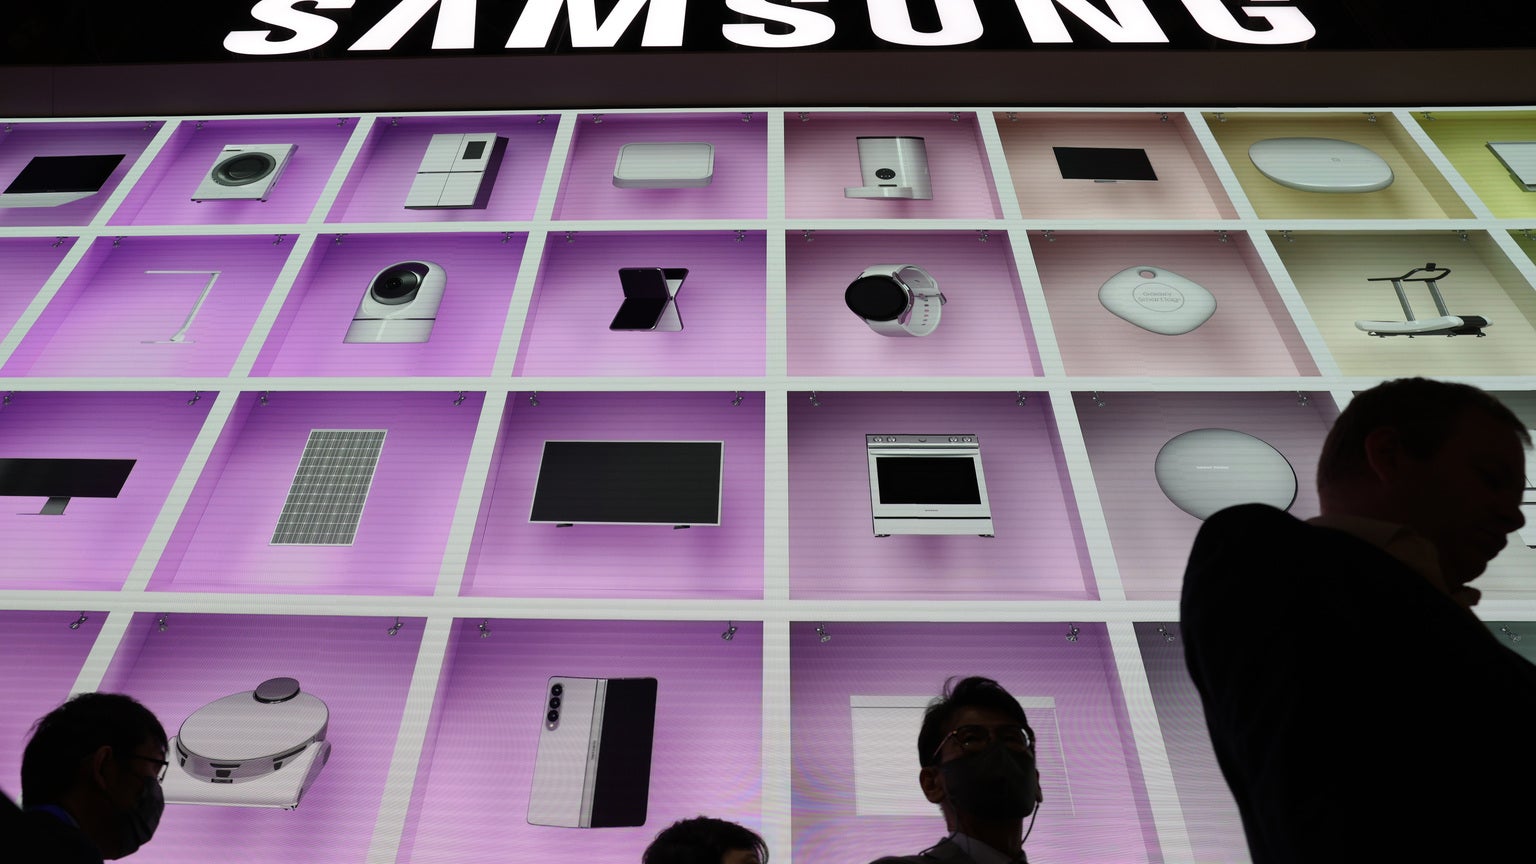 Samsung's Harman demonstrates new car display concepts using SDC's